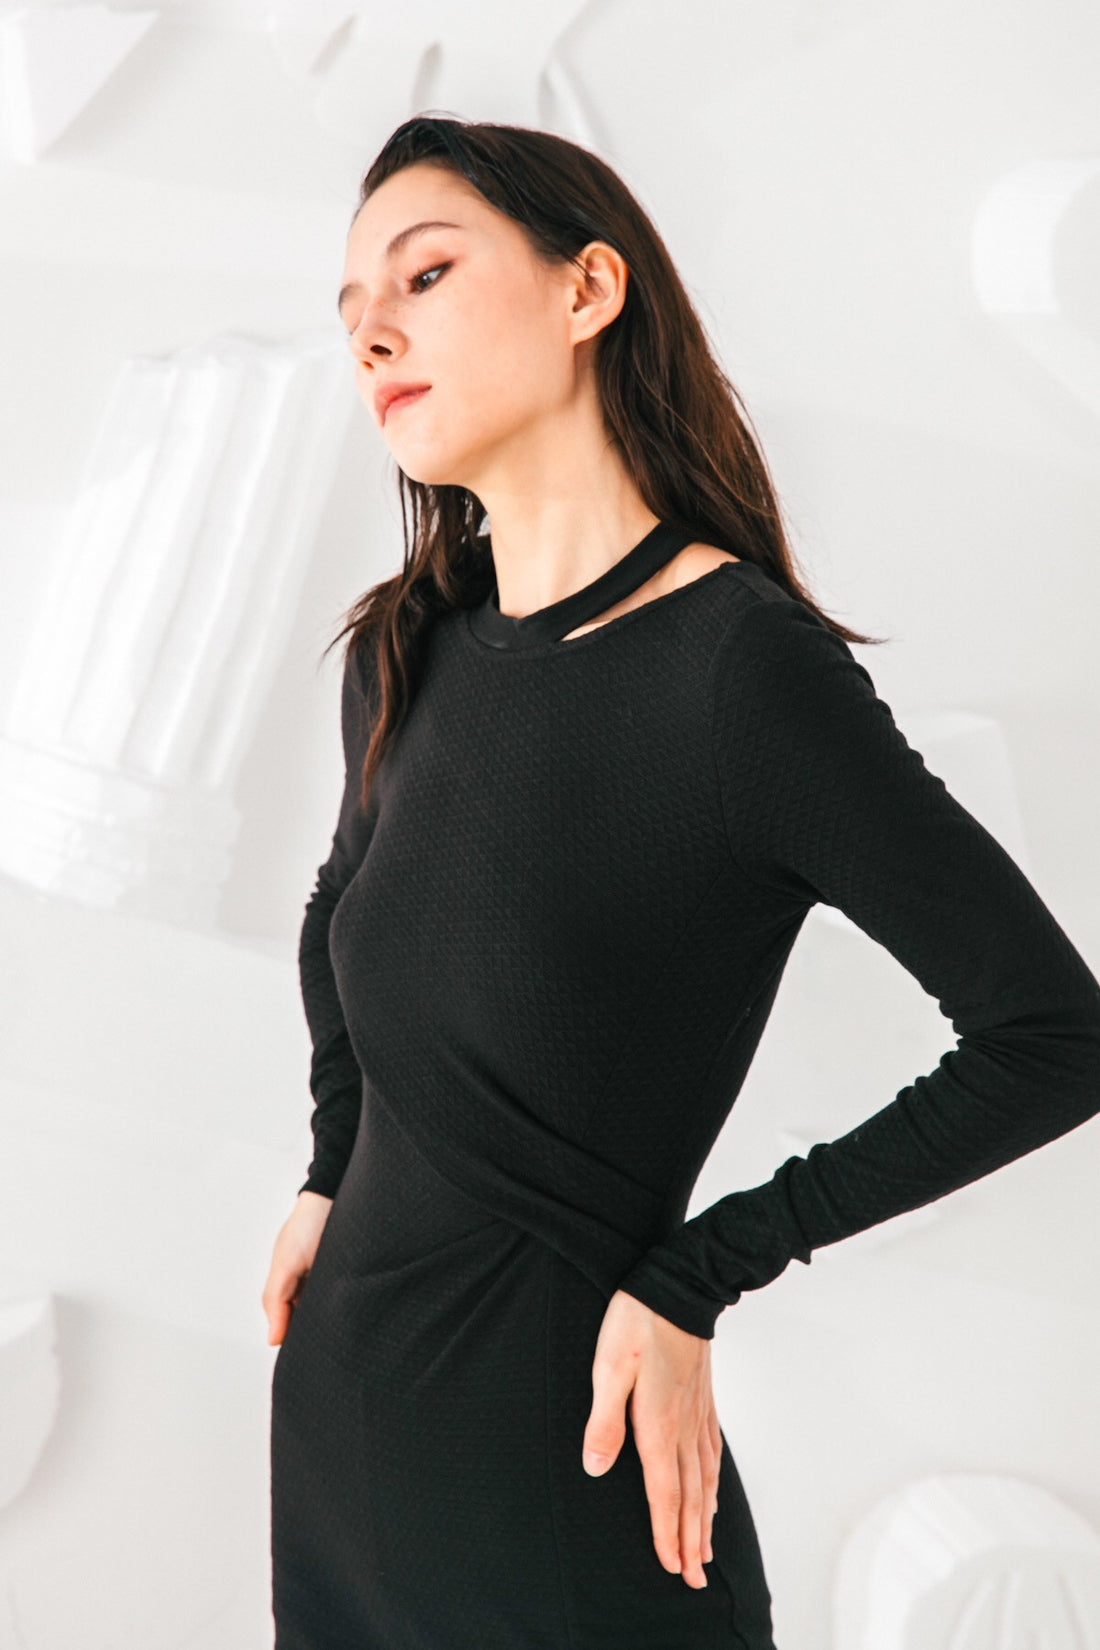 SKYE San Francisco SF shop ethical modern minimalist quality women clothing fashion Mélanie Dress black 2